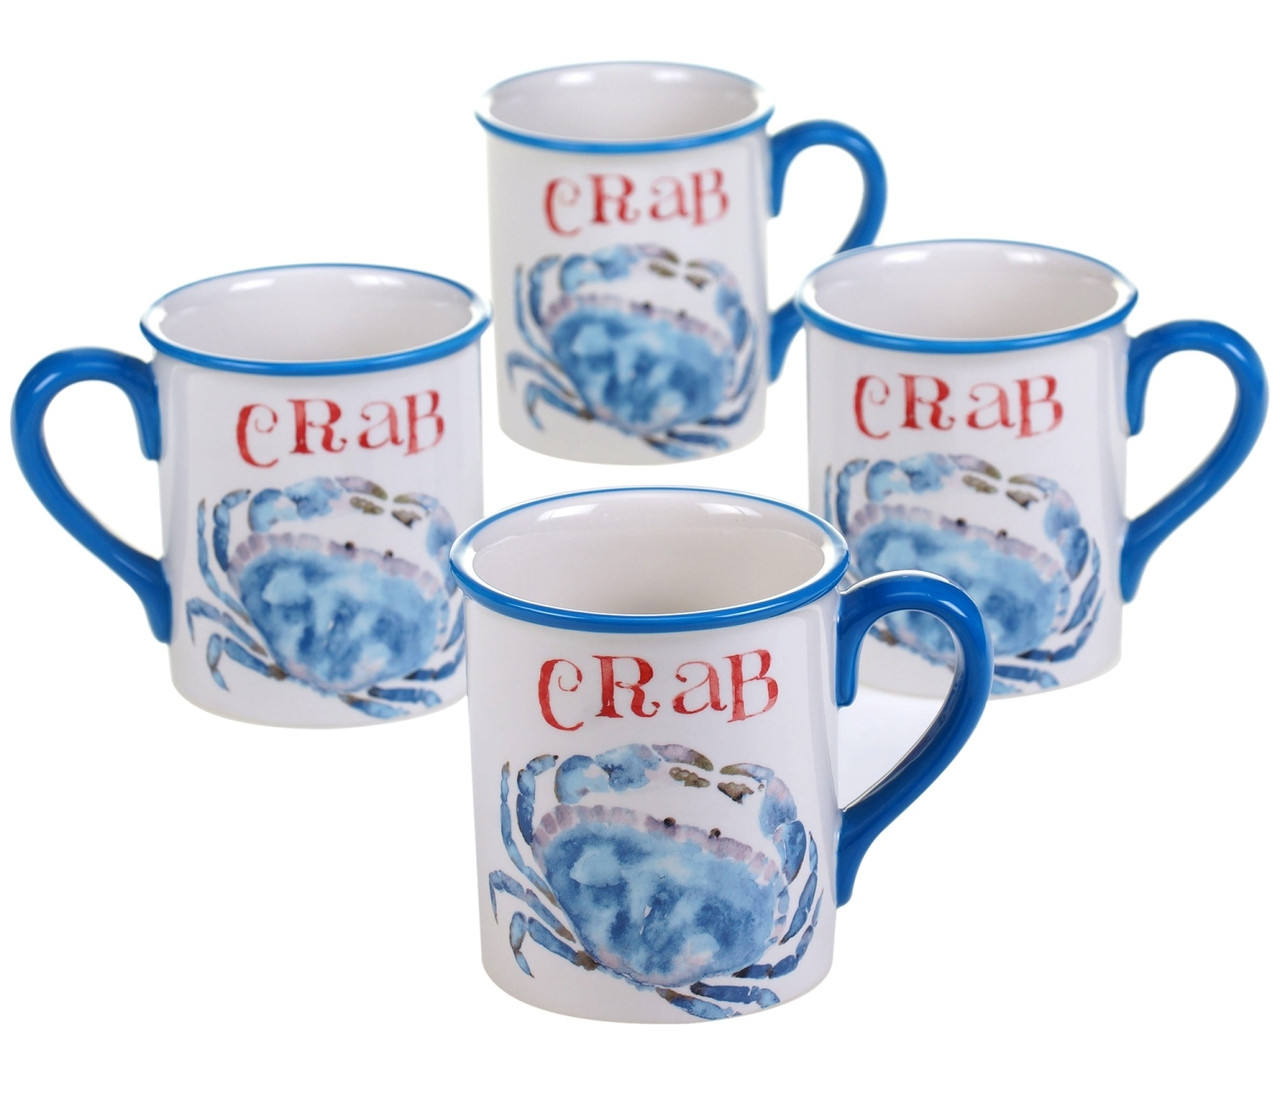 Blue Crab Ceramic Mug  Shore Decor Coastal Home Furnishings